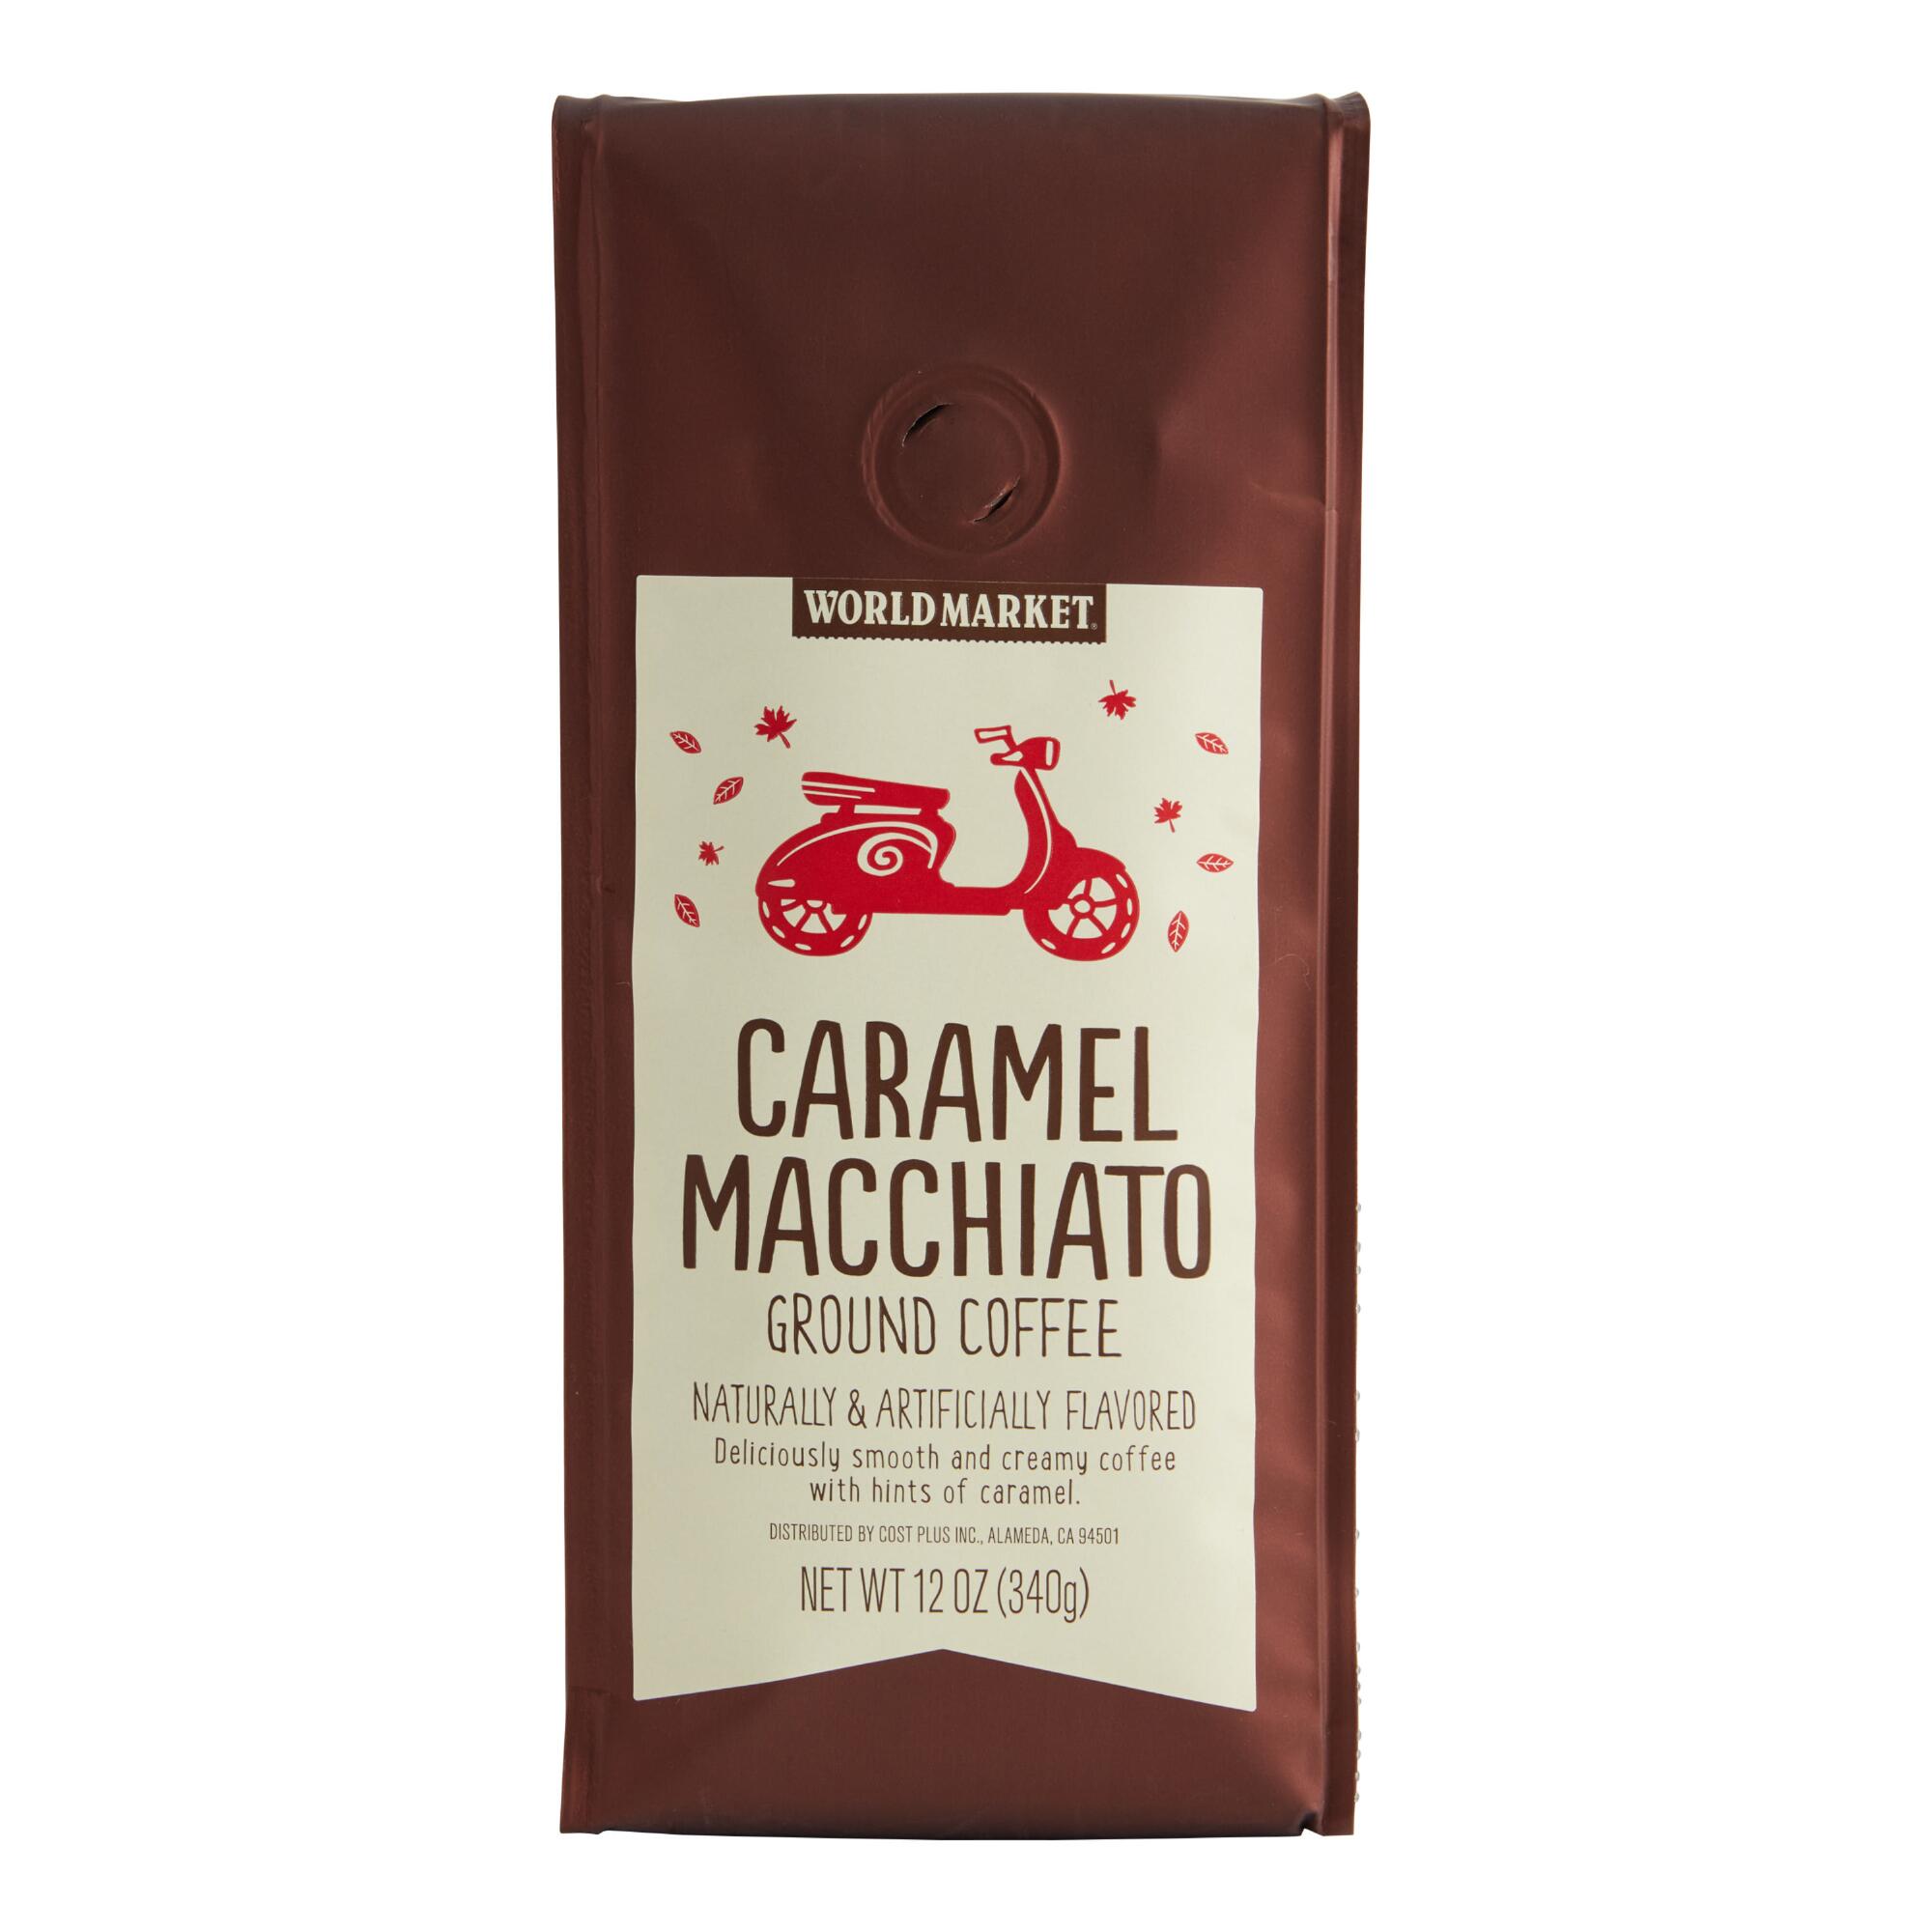 12 Oz. World Market Caramel Macchiato Ground Coffee by World Market